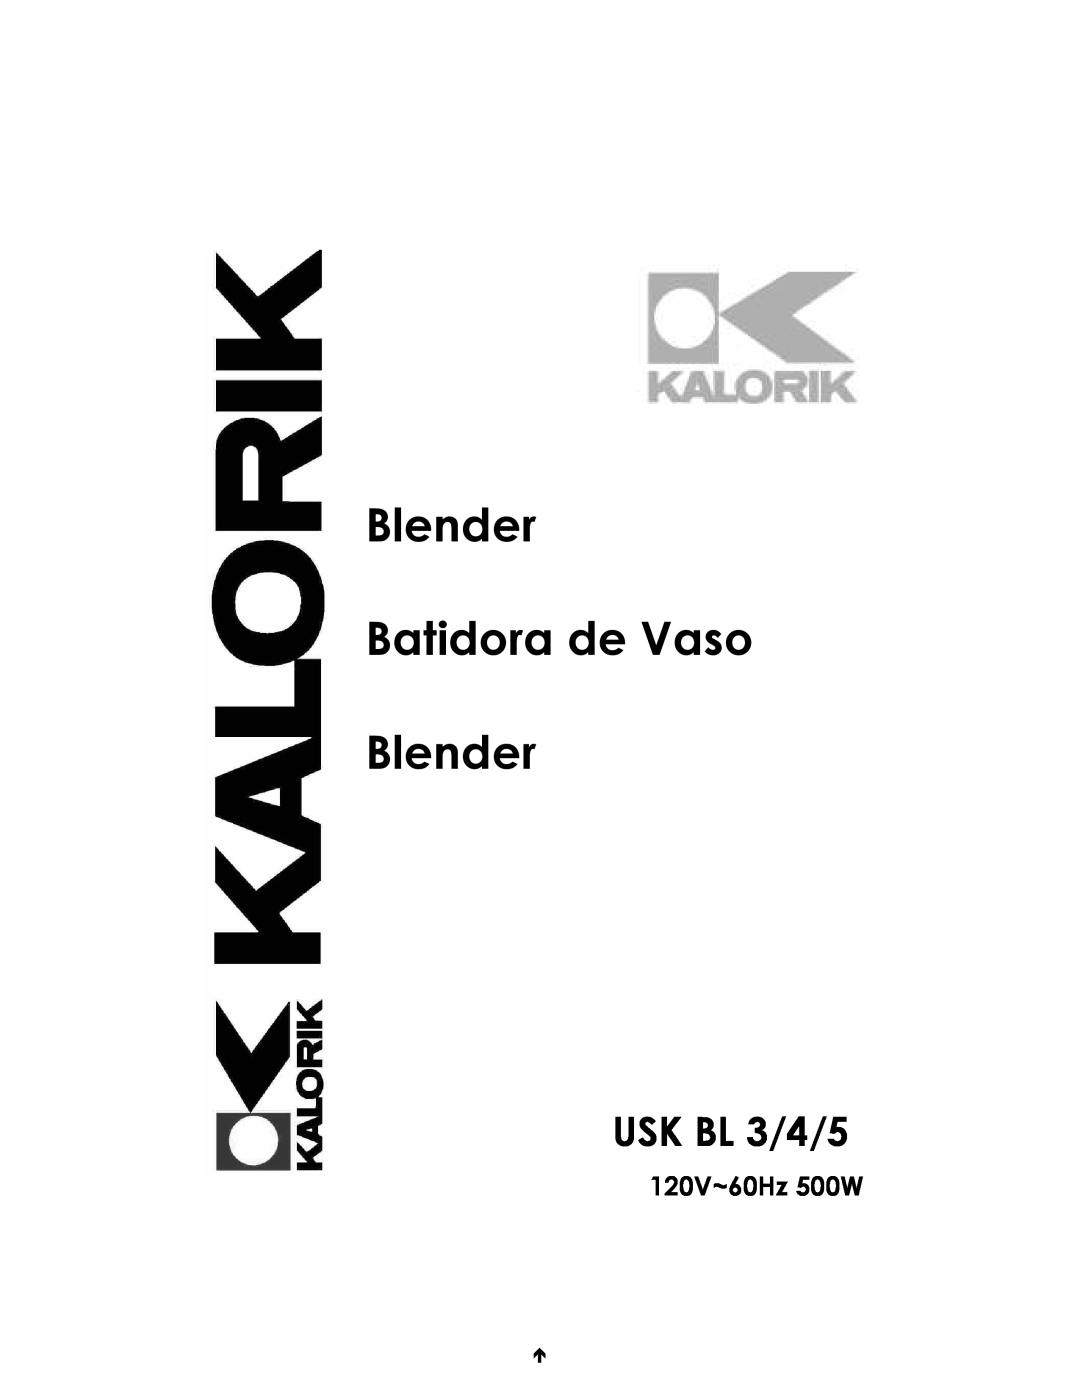 Kalorik USK BL 3/4/5 manual 120V~60Hz 500W, Blender Batidora de Vaso Blender 